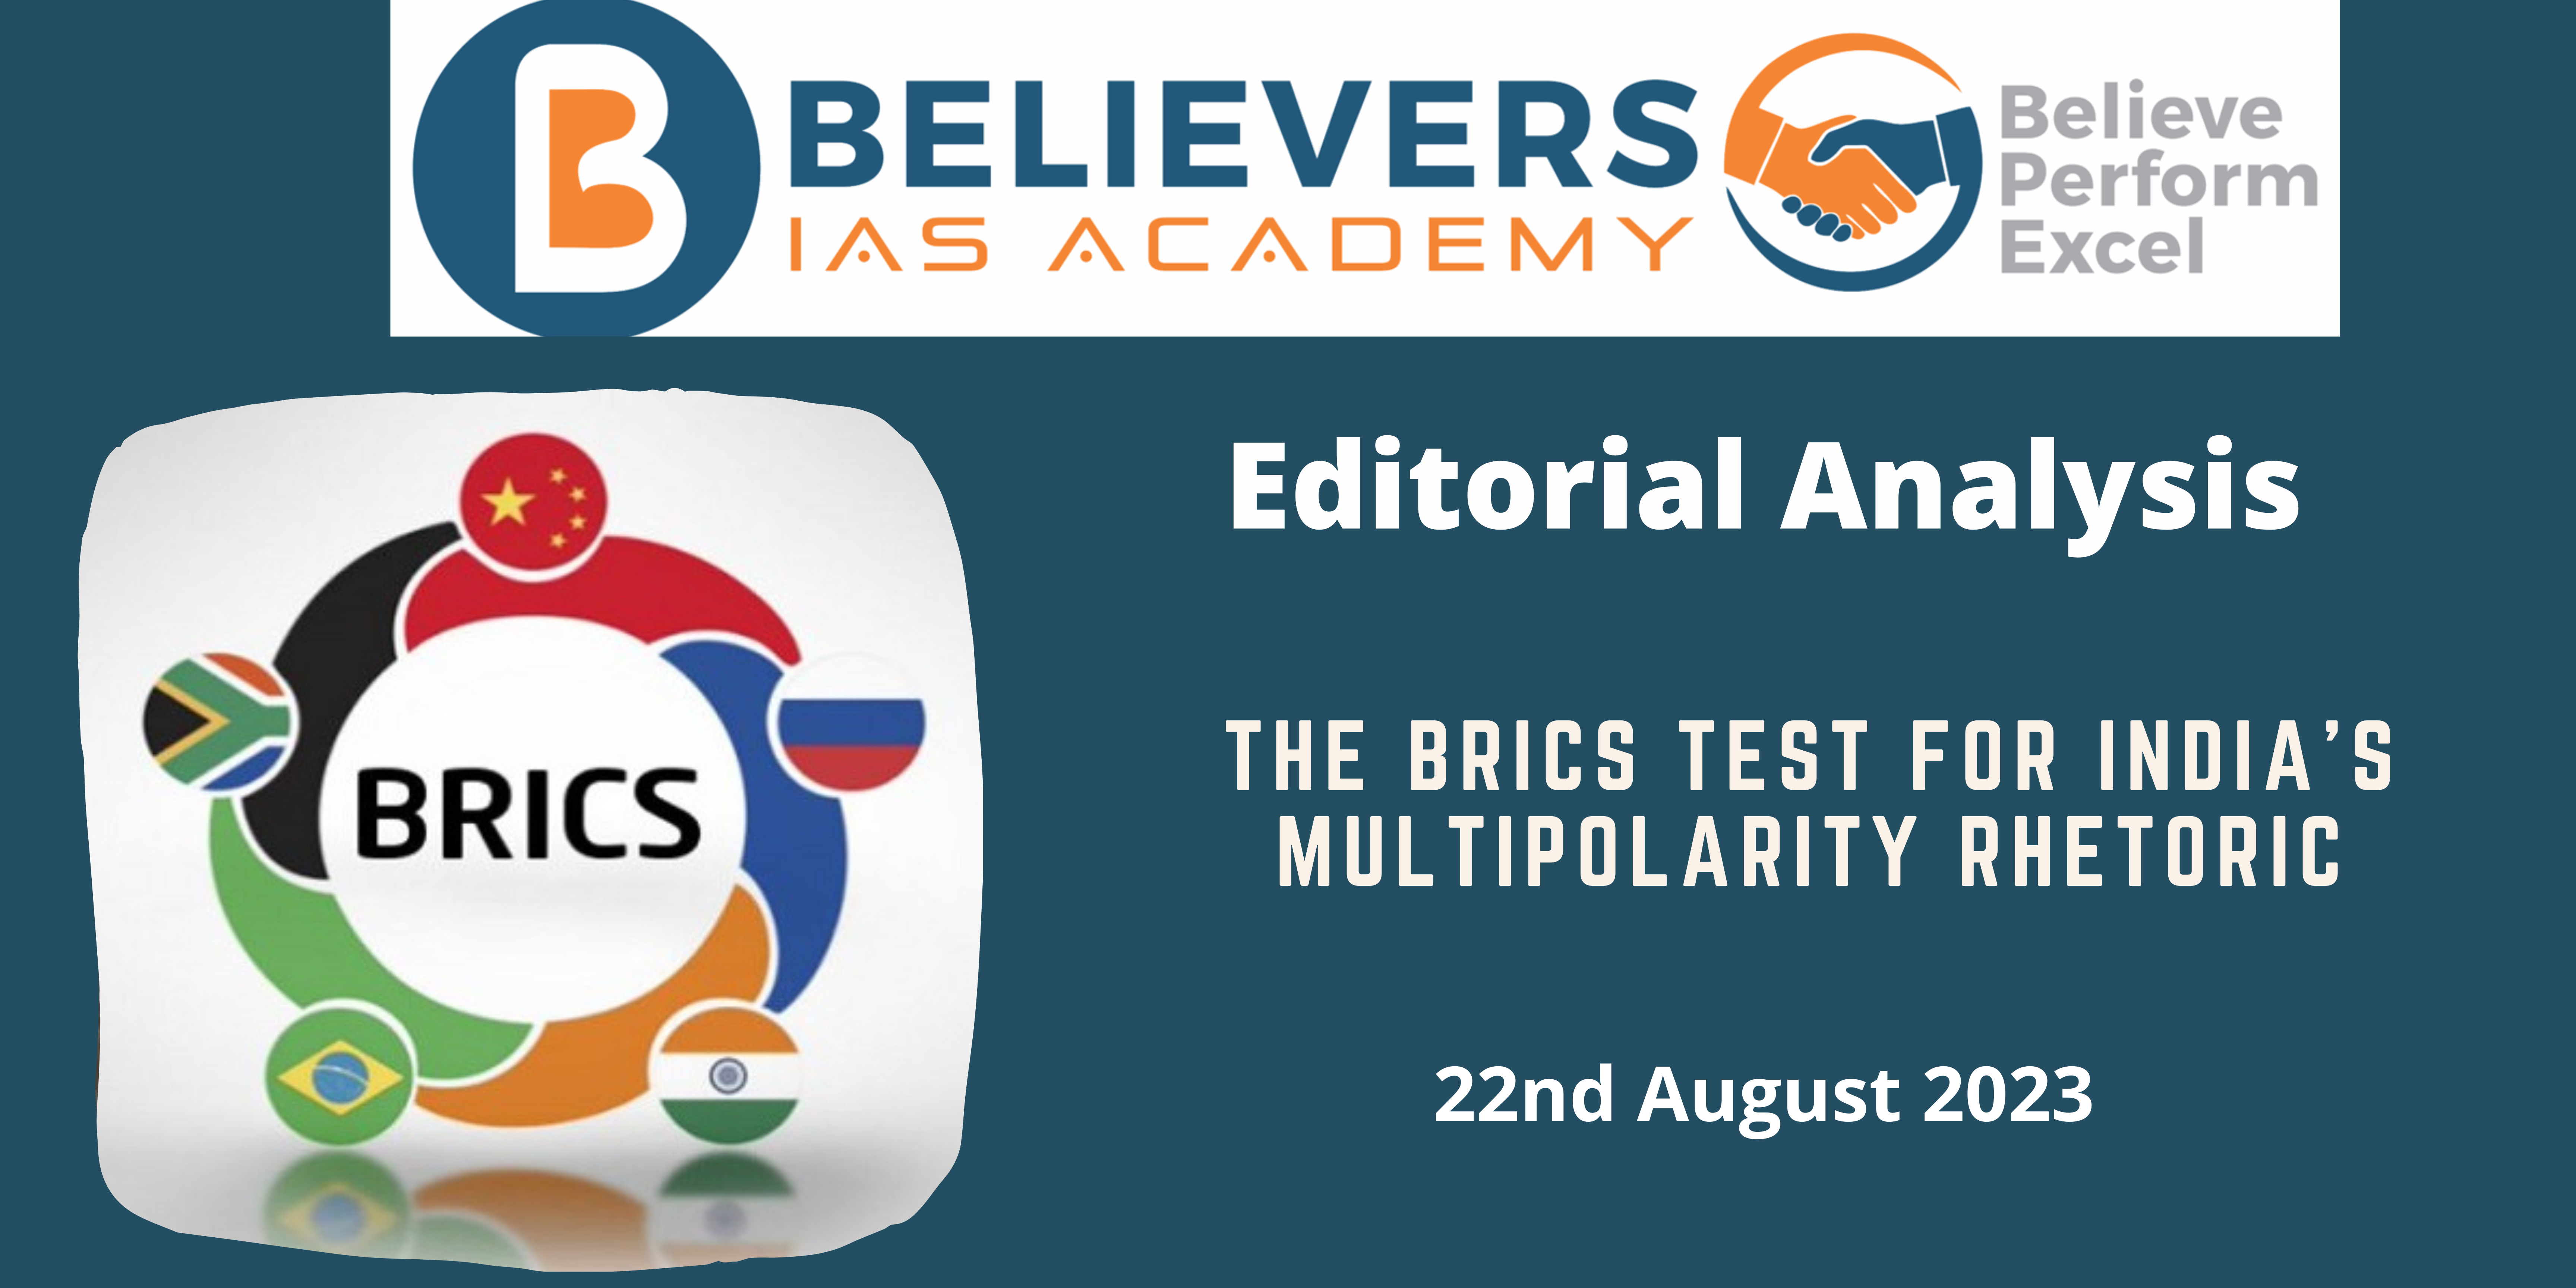 The BRICS test for India’s multipolarity rhetoric